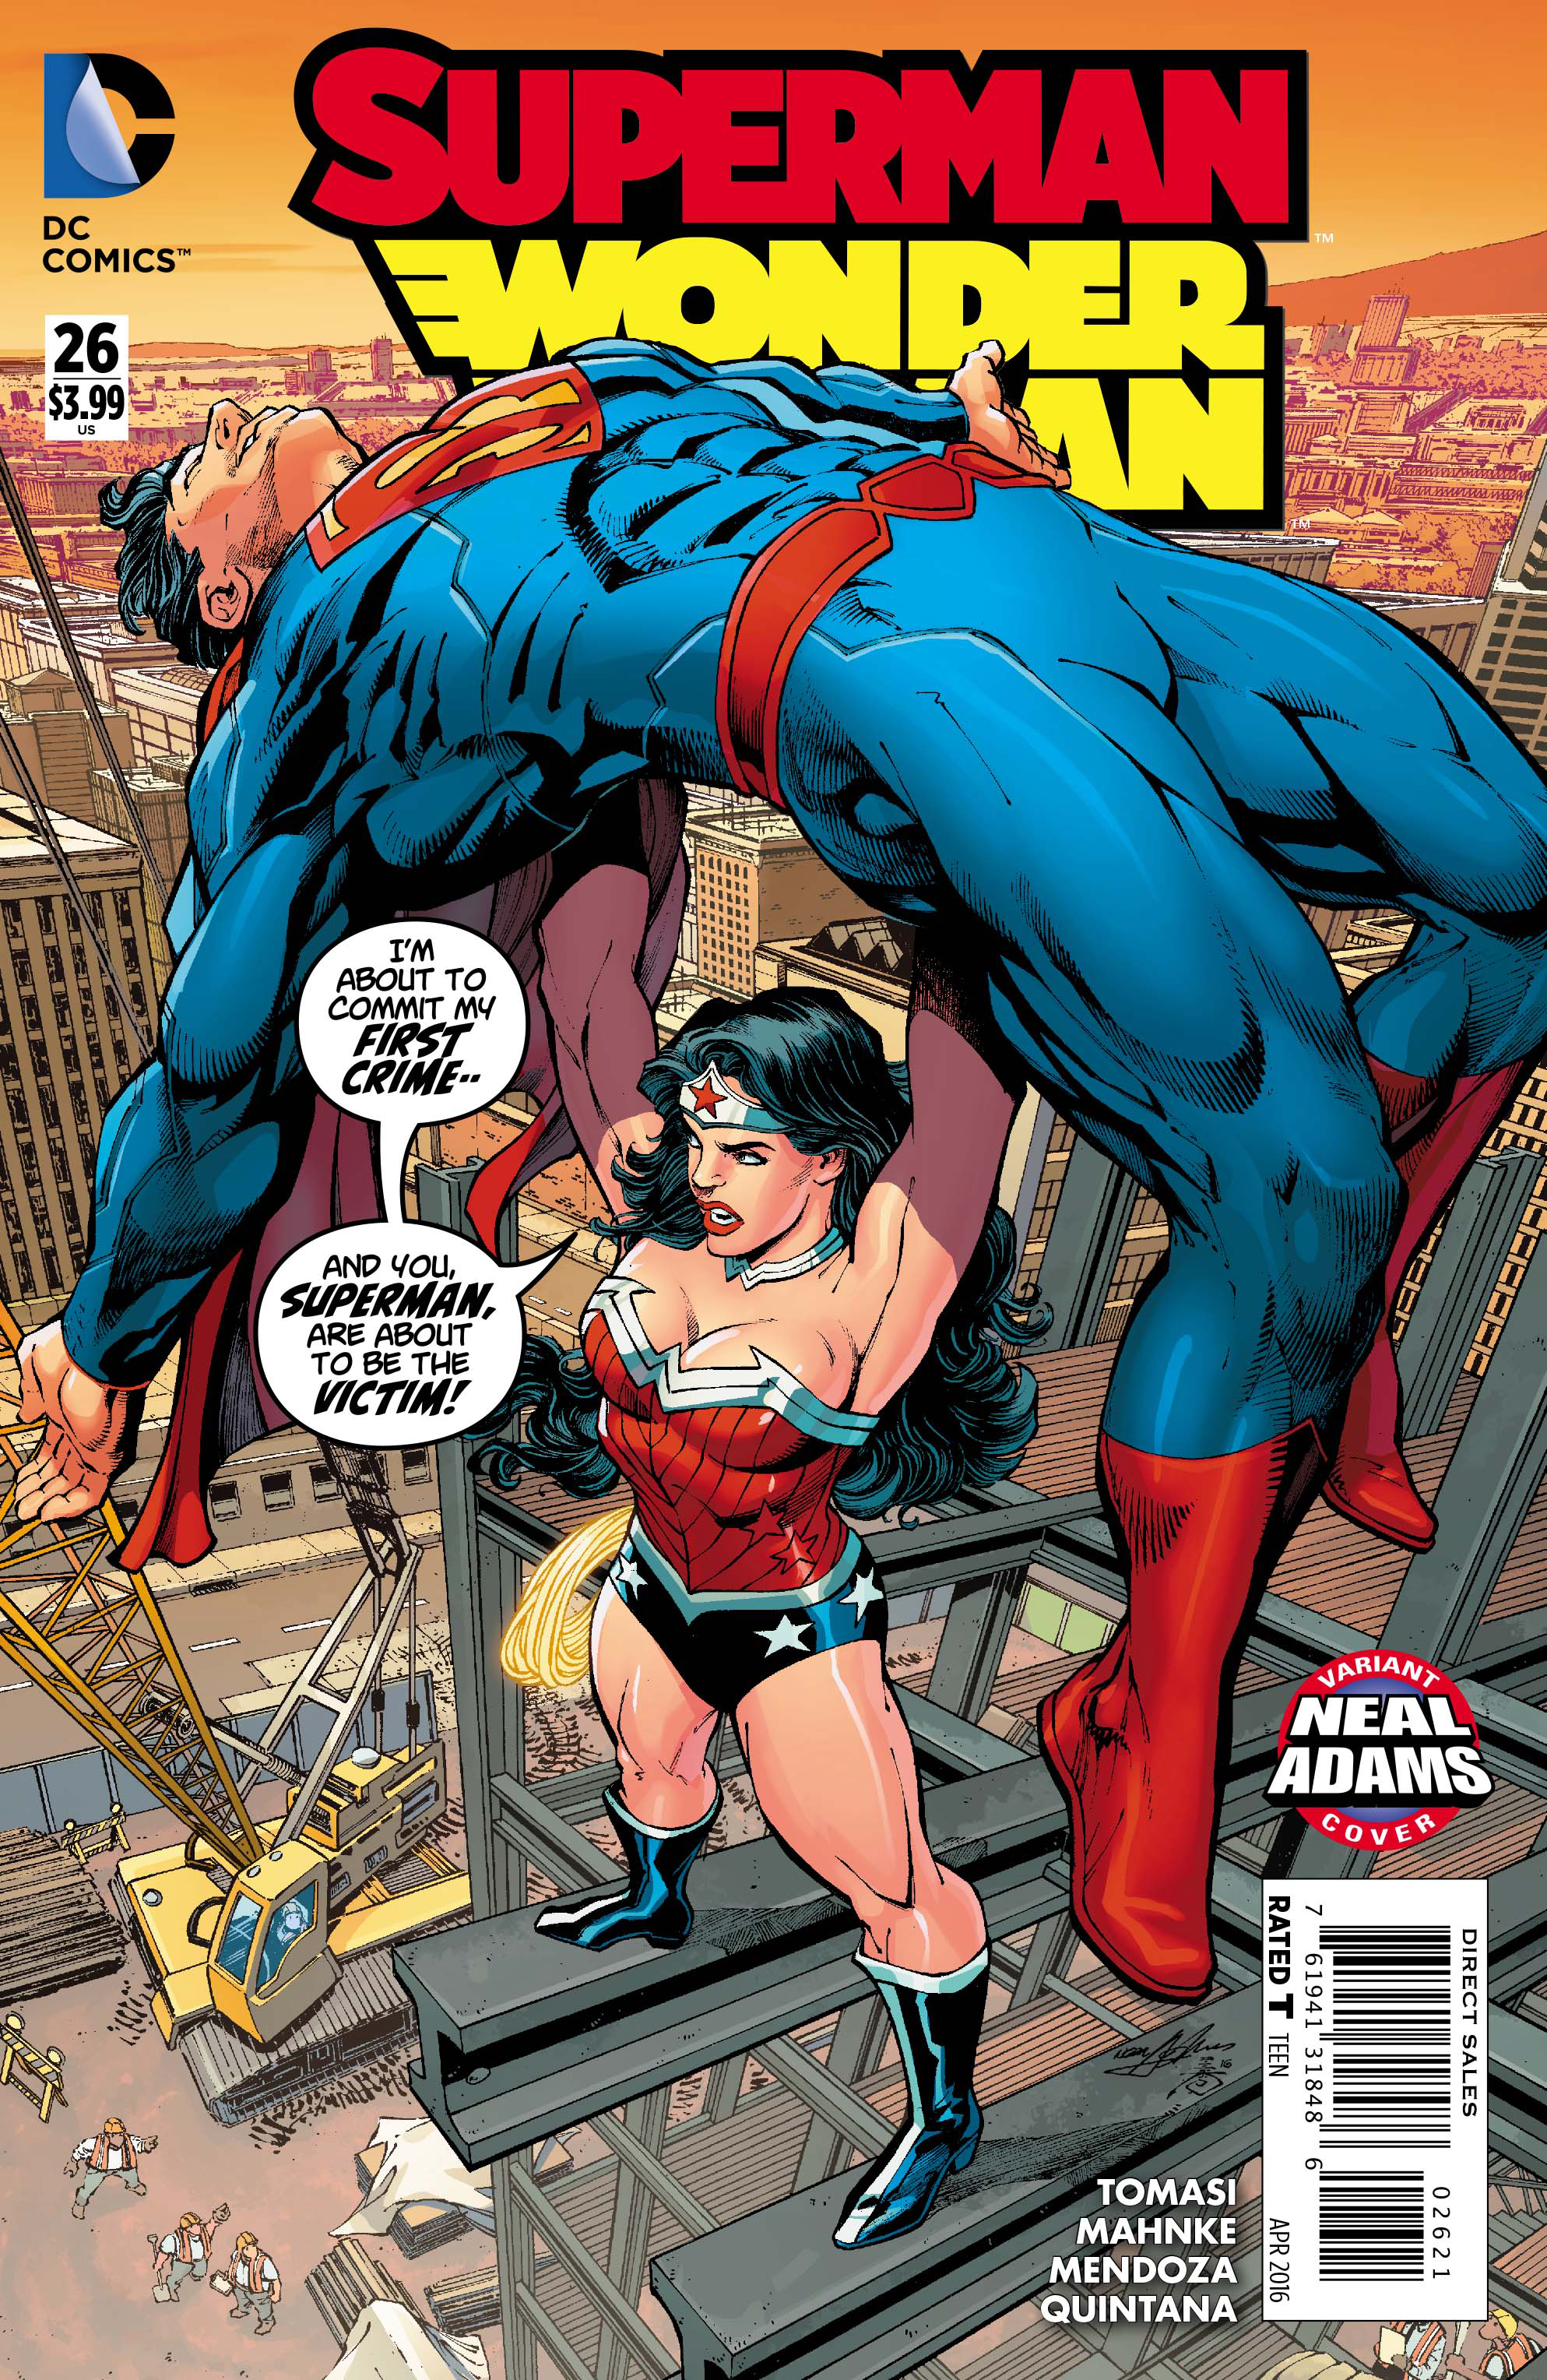 SUPERMAN WONDER WOMAN #26 NEAL ADAMS VAR ED